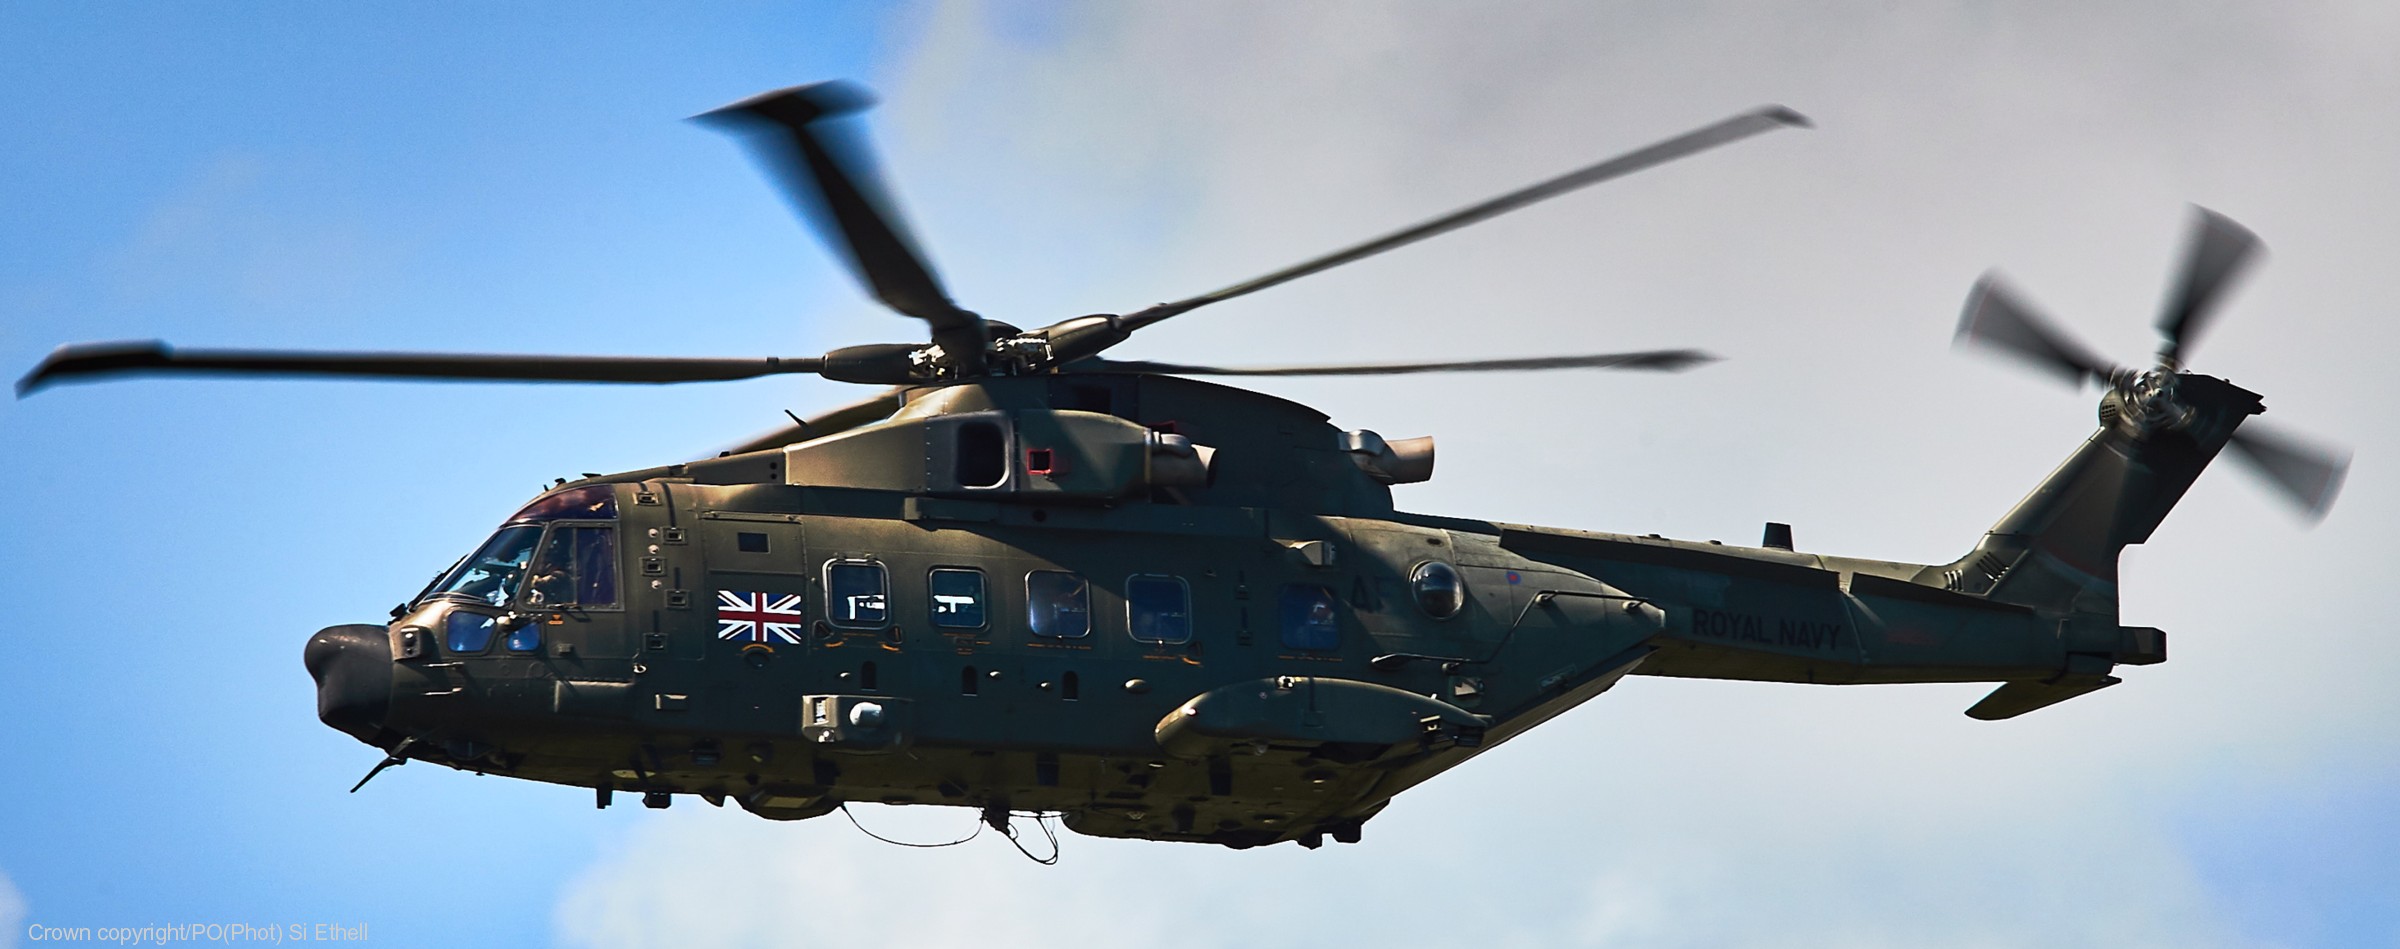 merlin hc3 hc3a mk.3 commando helicopter aw101 force chf royal navy 845 846 naval air squadron rnas yeovilton agusta westland marines 21